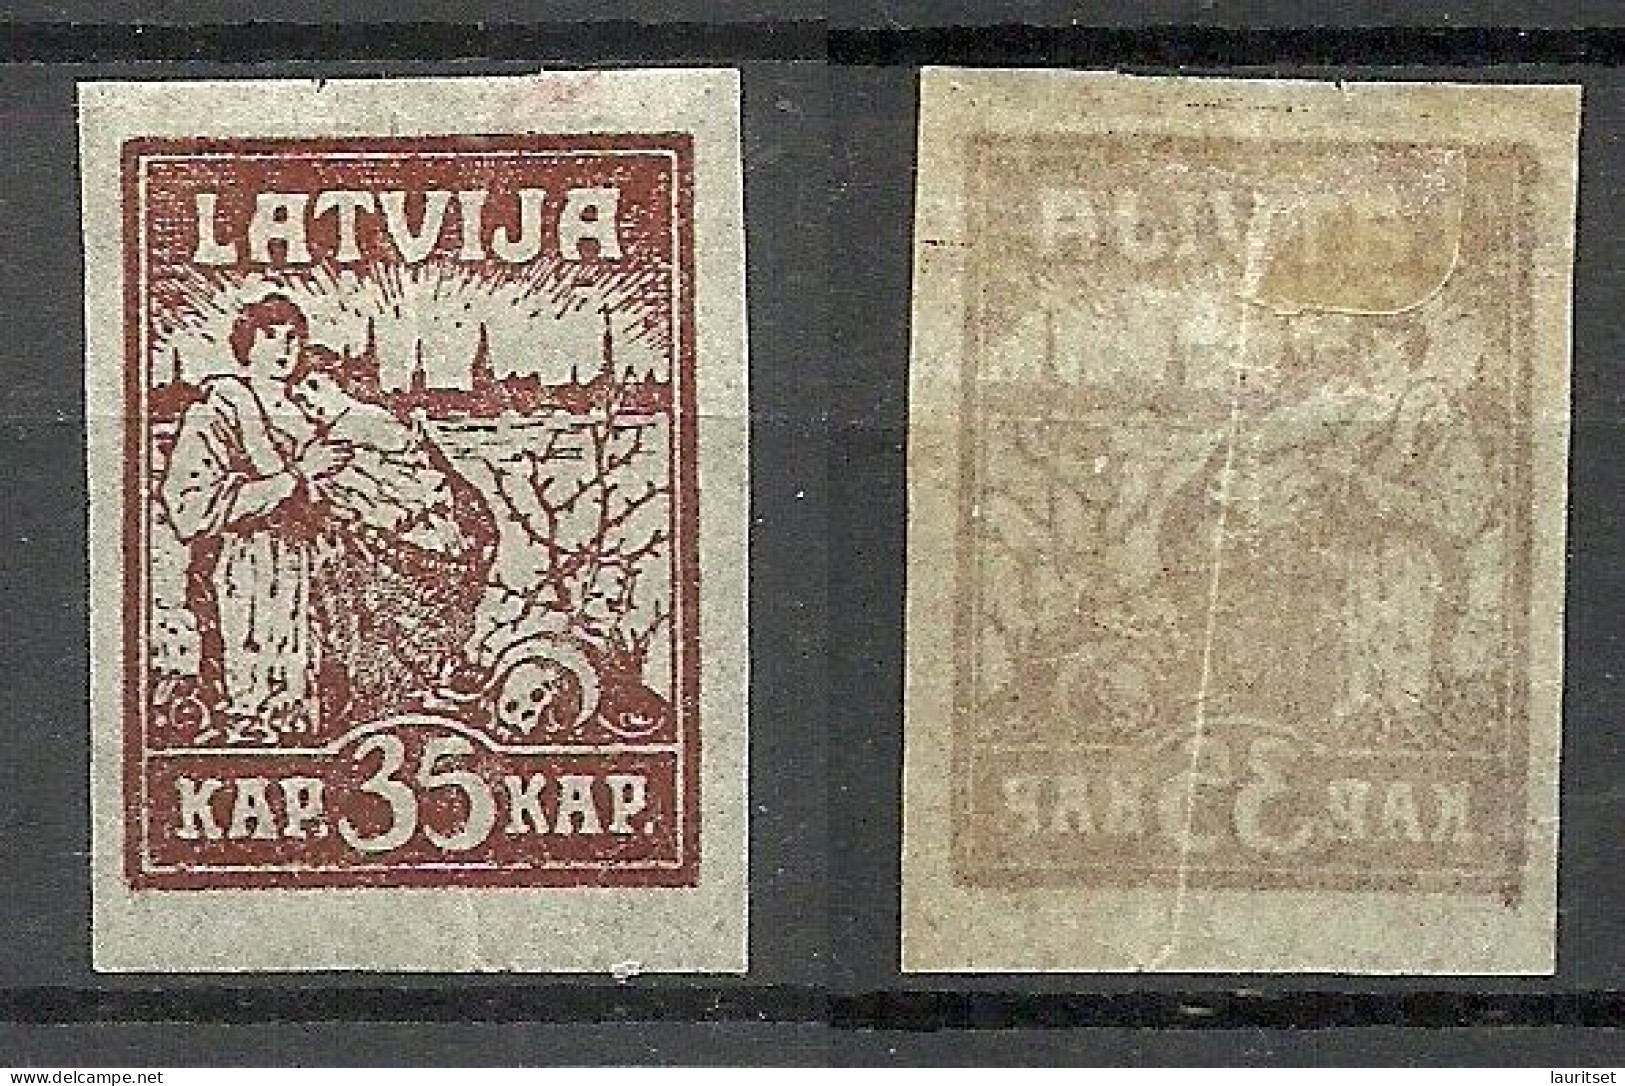 LETTLAND Latvia 1919 Michel 27 Y Zigarettenpapier Pelure Paper * NB! Light Vertical Fold Mark! - Lettonia